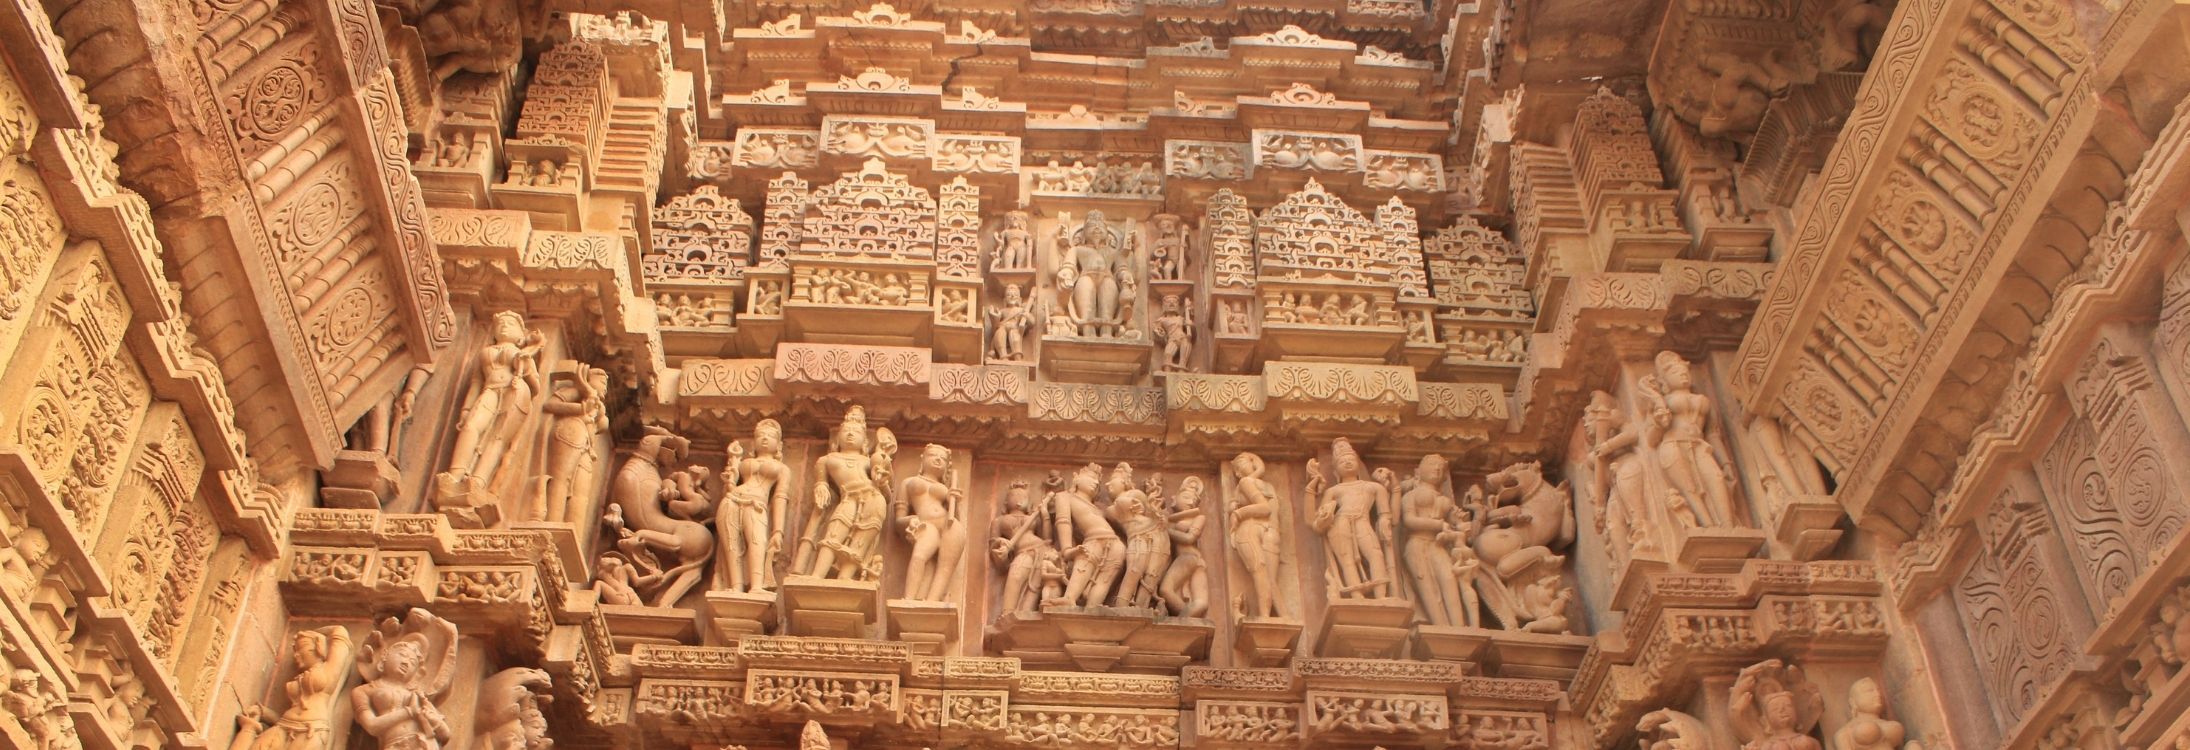 10 Architectural Wonders of India - Musafir